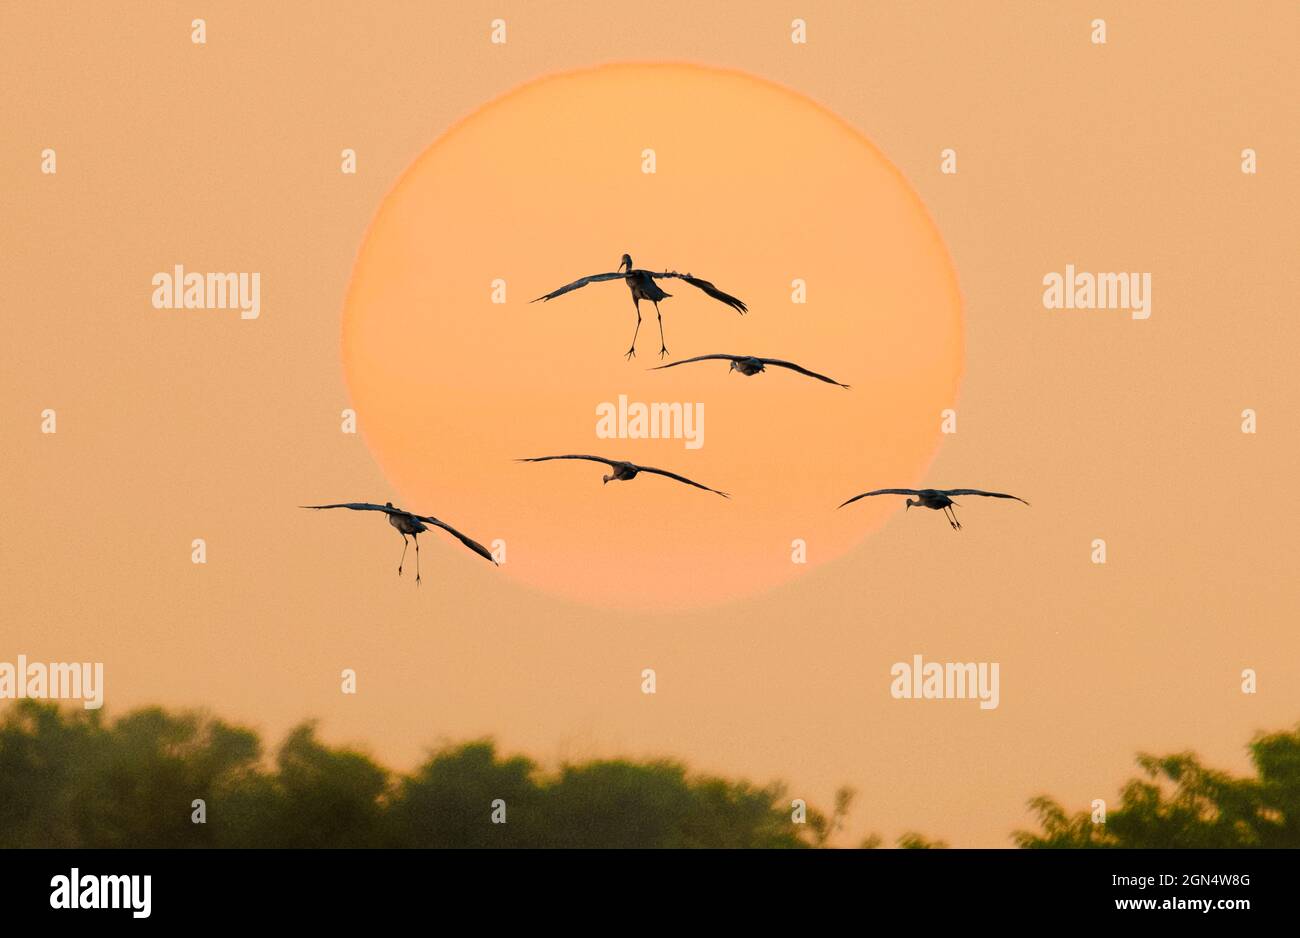 Wintering Sandhill Crane birds alight silhouetted by setting orange sun Stock Photo